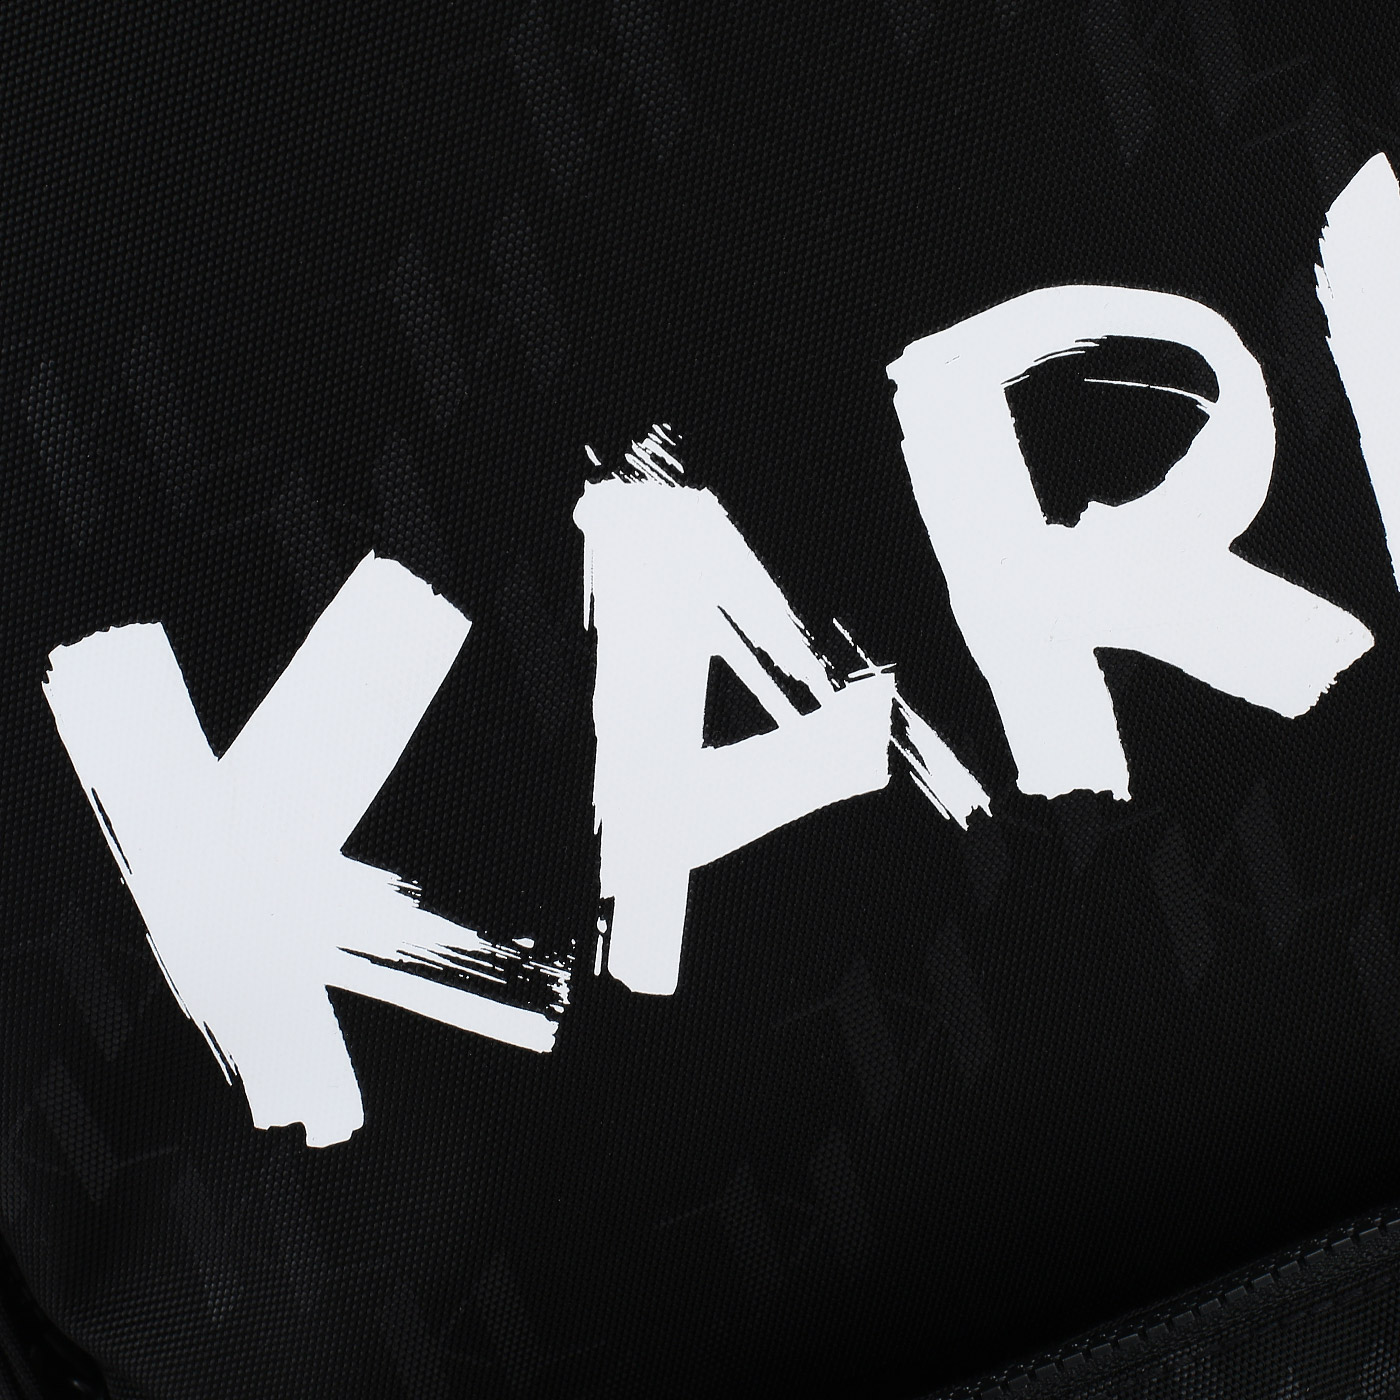 Городской рюкзак Karl Lagerfeld Etch